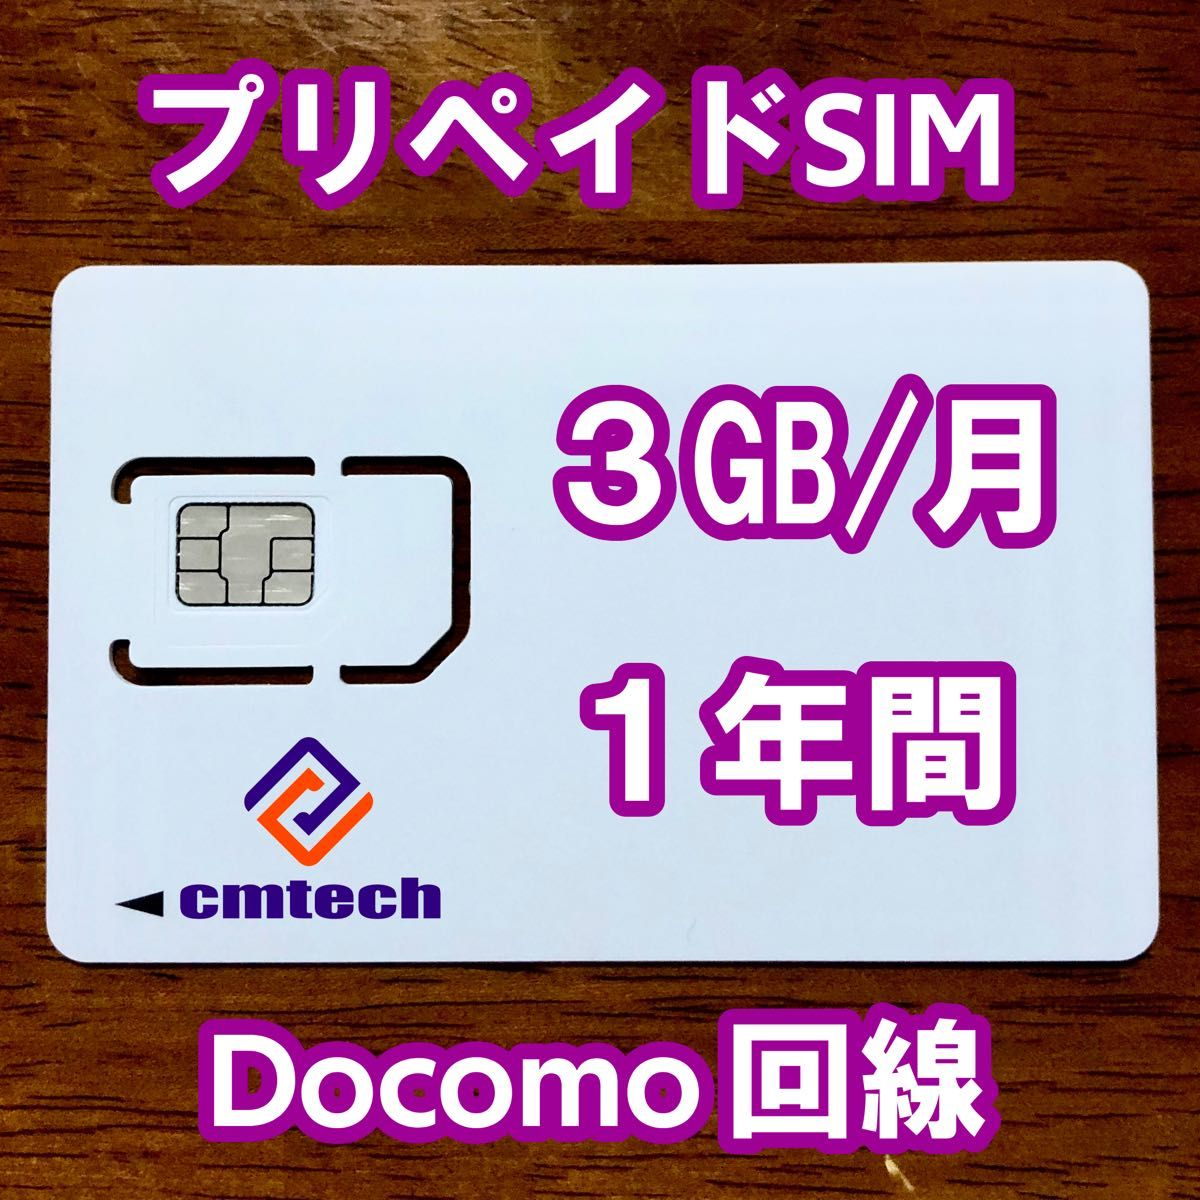 Docomo回線 プリペイドsim 3GB/月1年間有効 データ通信simカード